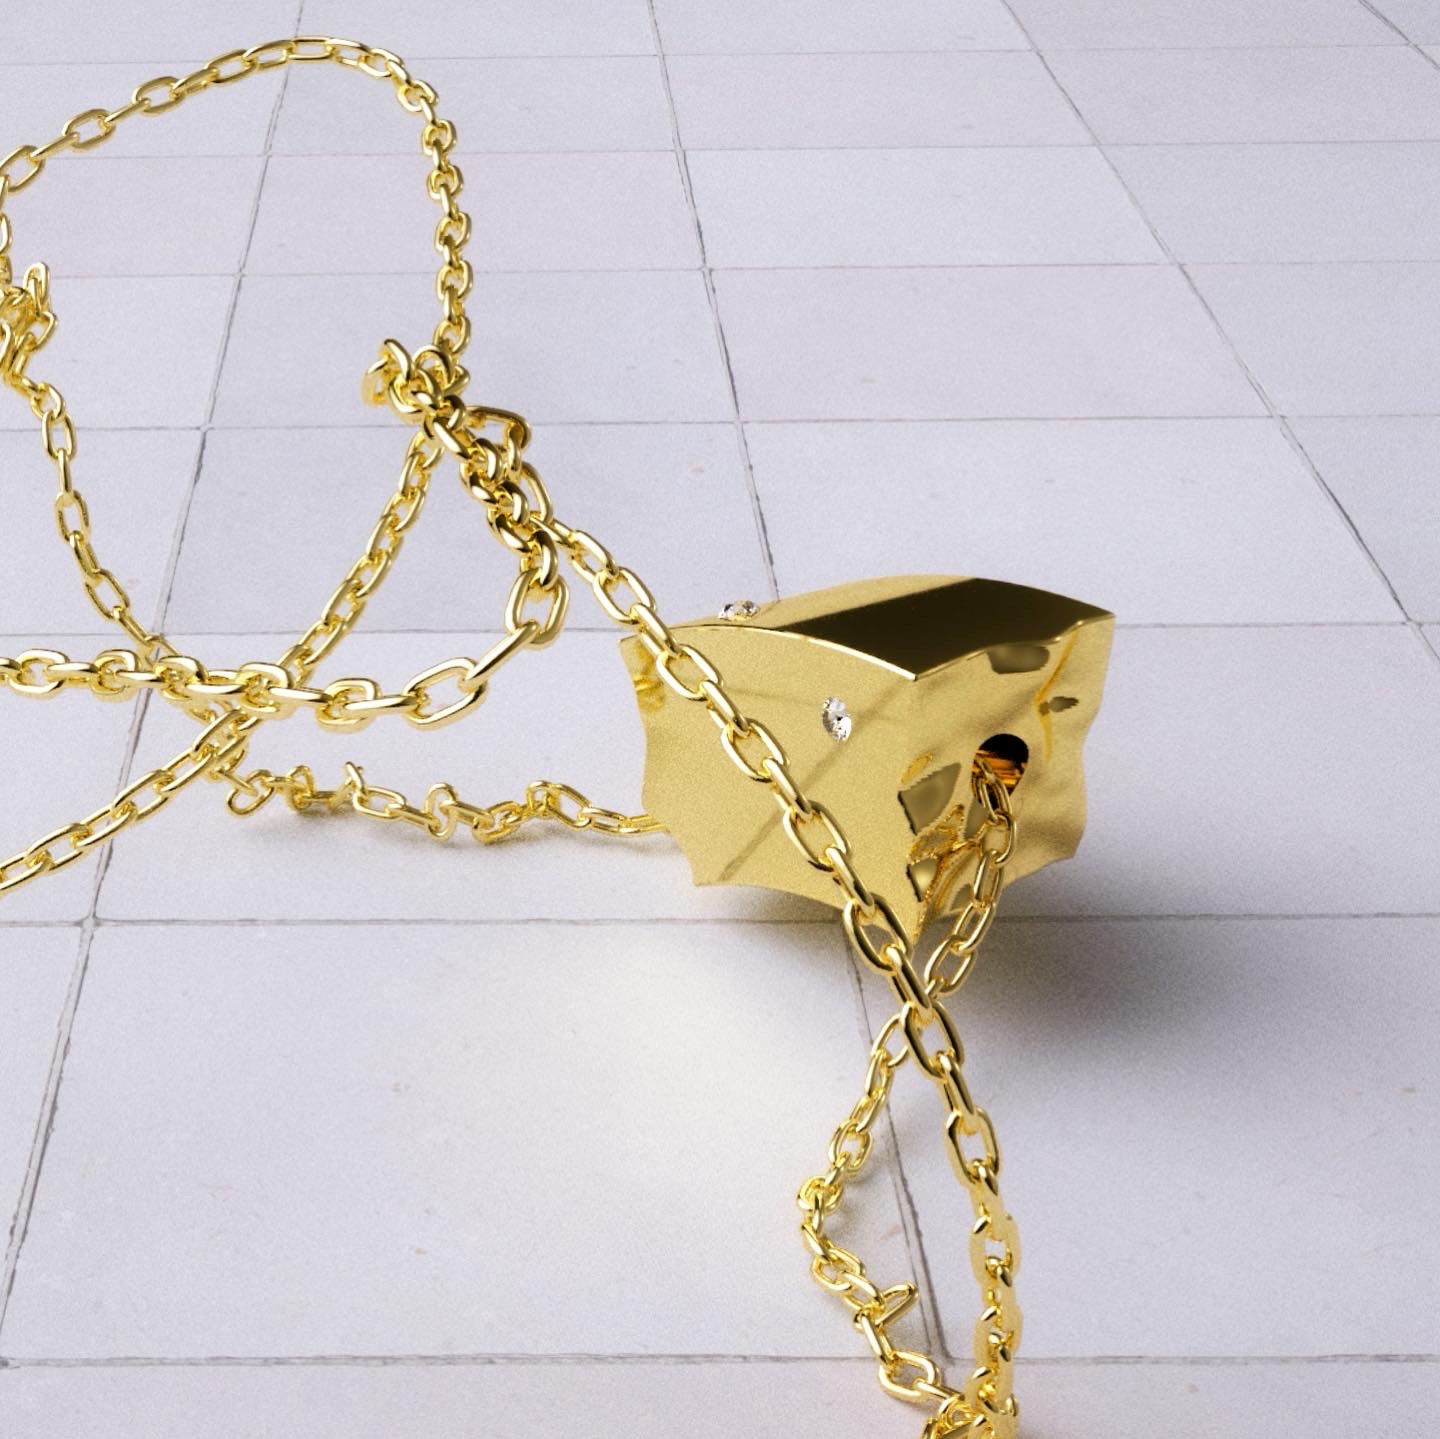 Blockchain Pendant, 18kt Yellow Gold, Diamonds Image Courtesy of S Faurschou